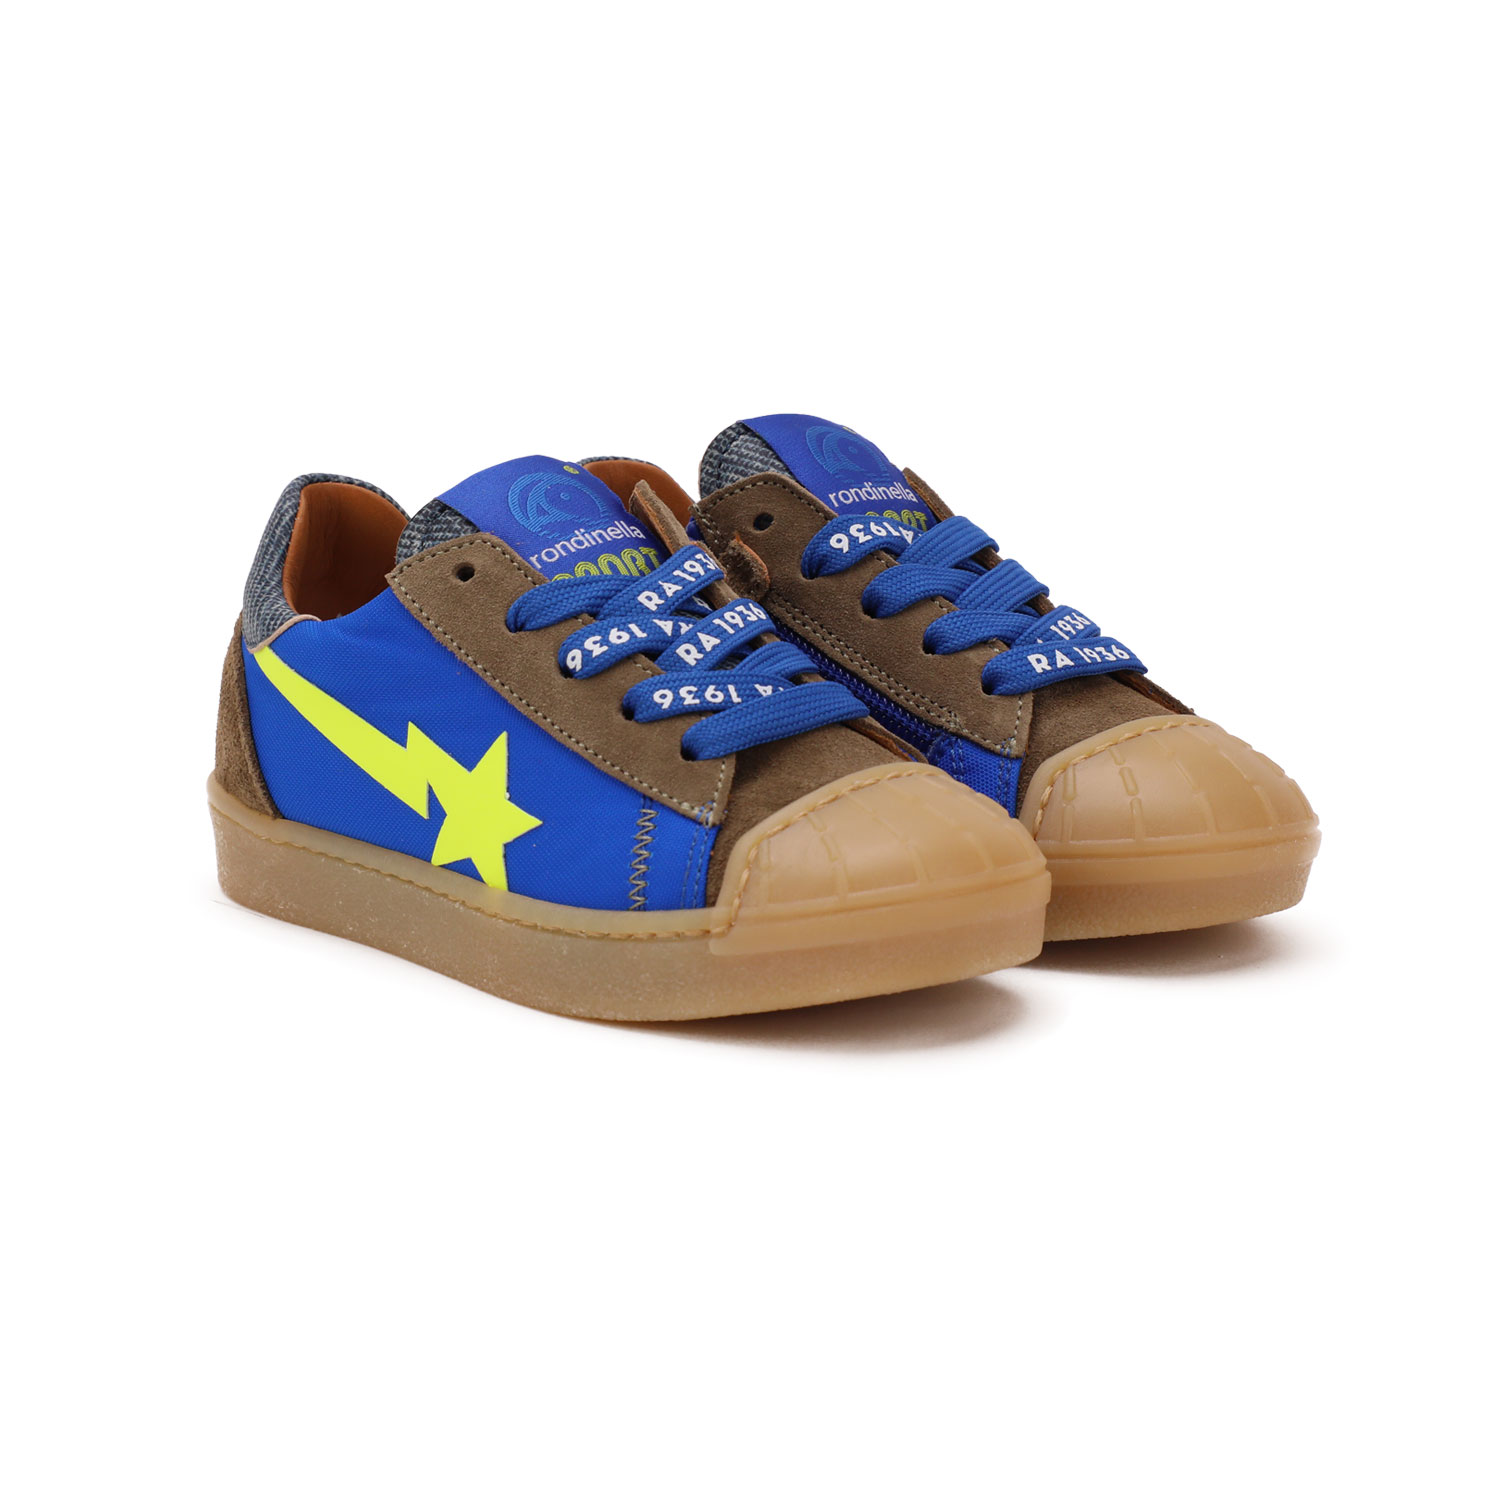 Rondinella brown blue sneaker Sydney AU